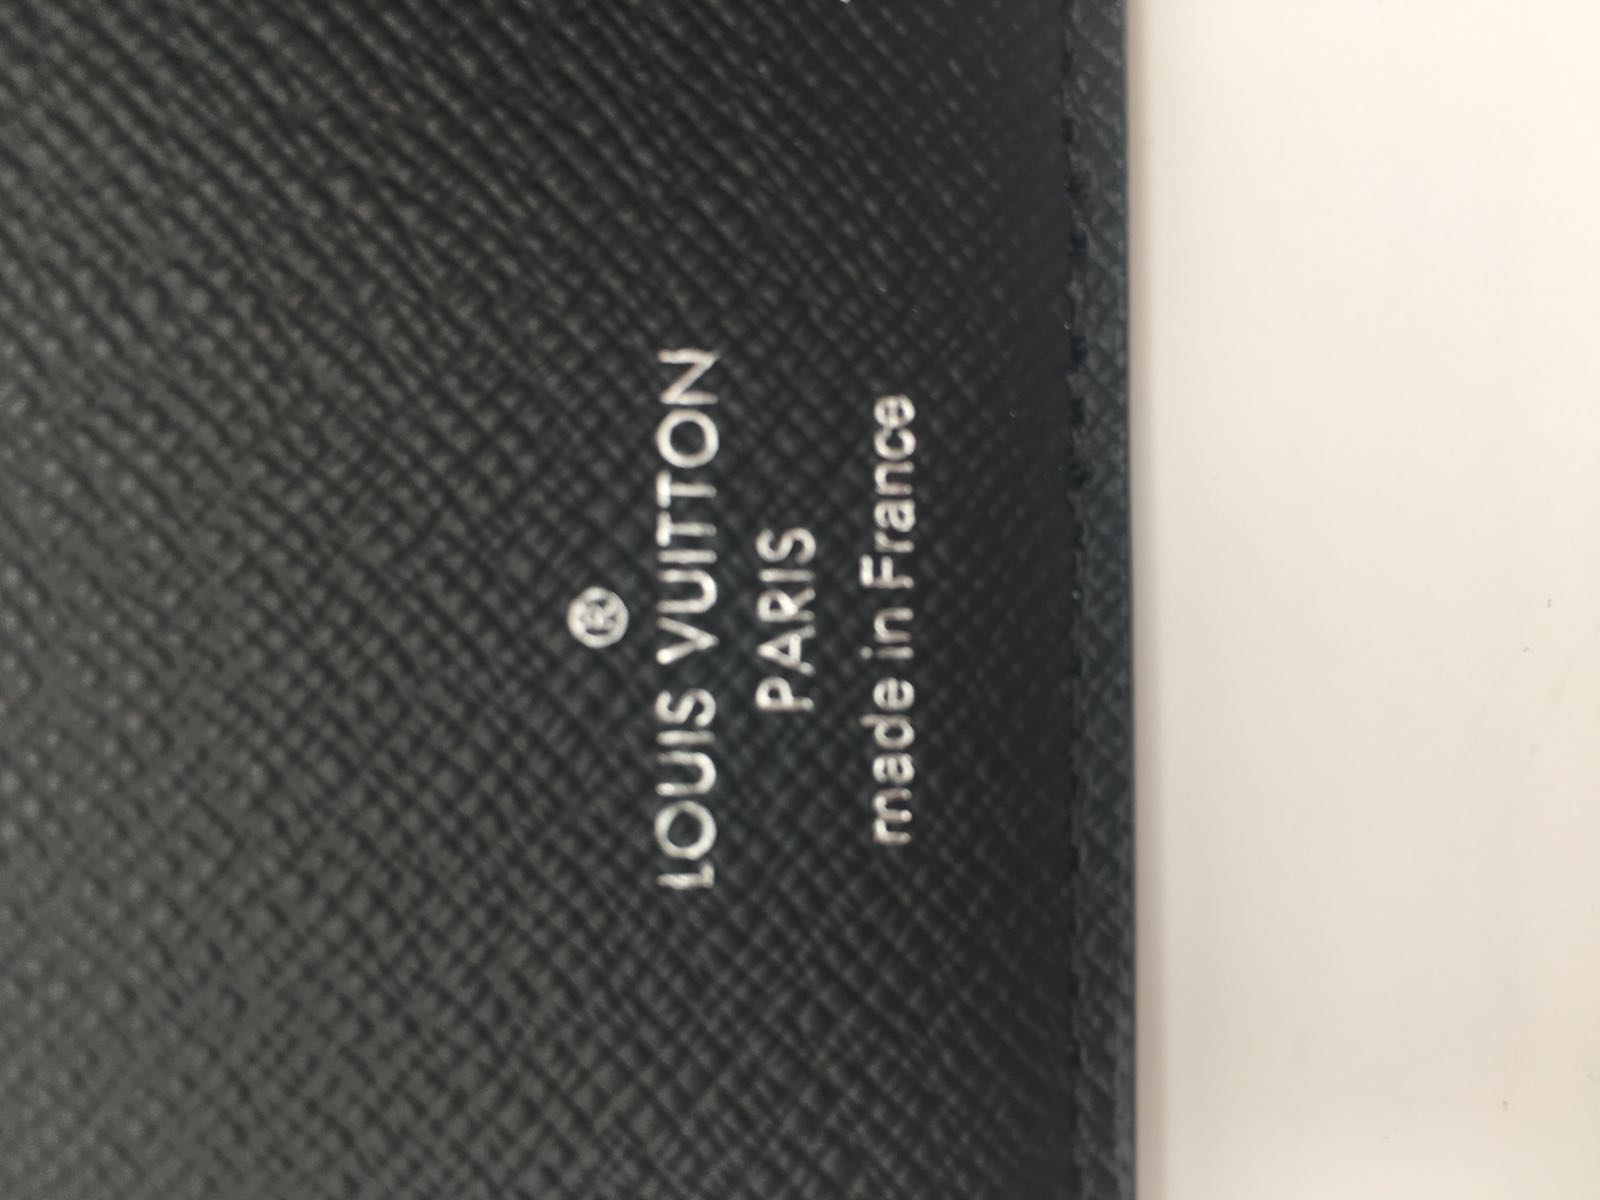 Louis Vuitton | Nigo Brazza Wallet | N60393 by The-Collectory